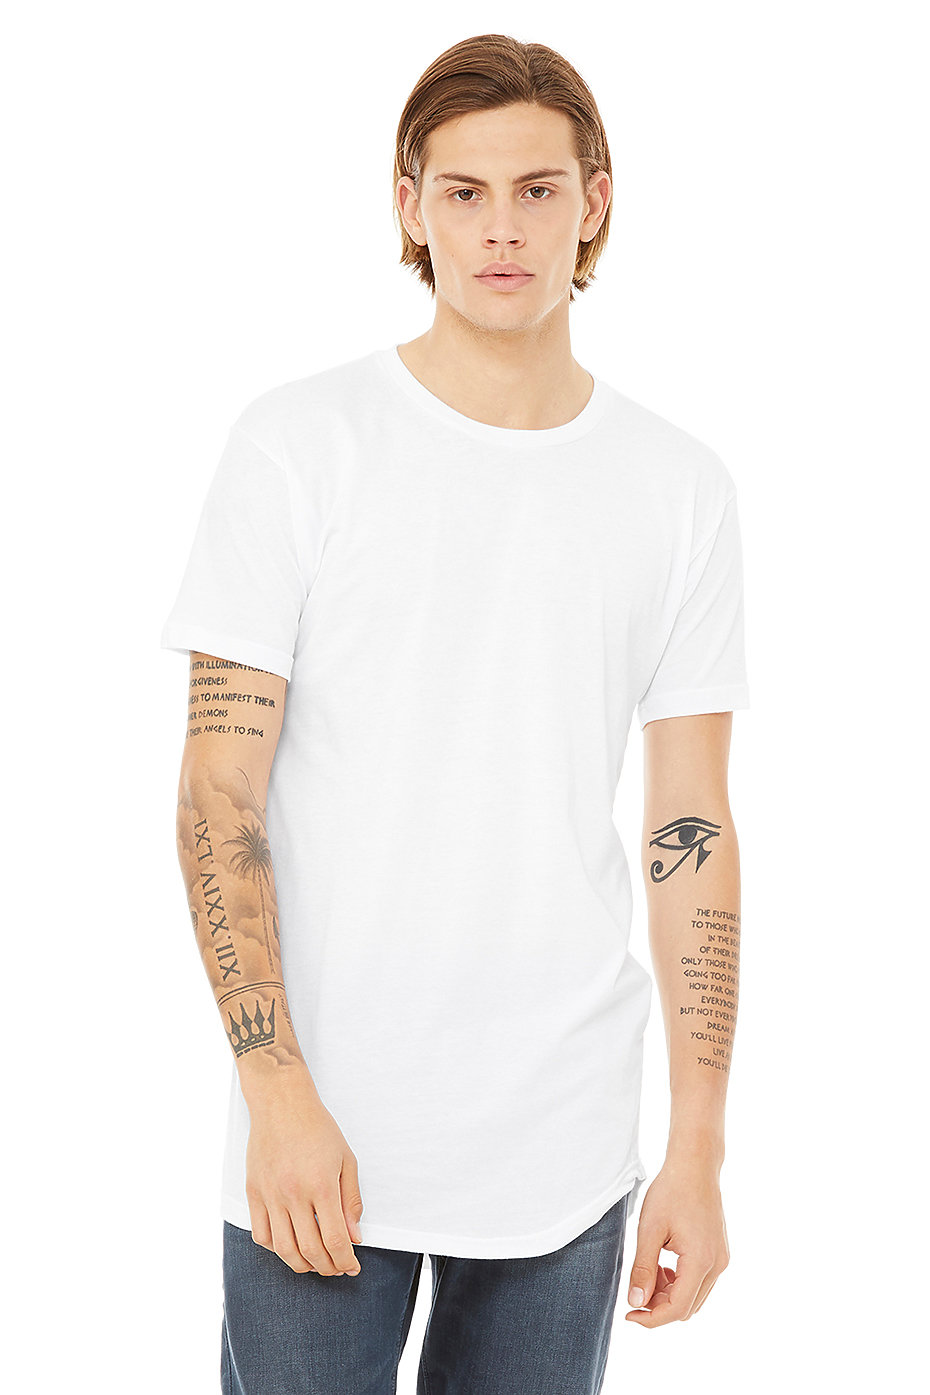 DailyWear Mens Casual Long Sleeve Plain Baseball Cotton T Shirts RED/White,  Medium 